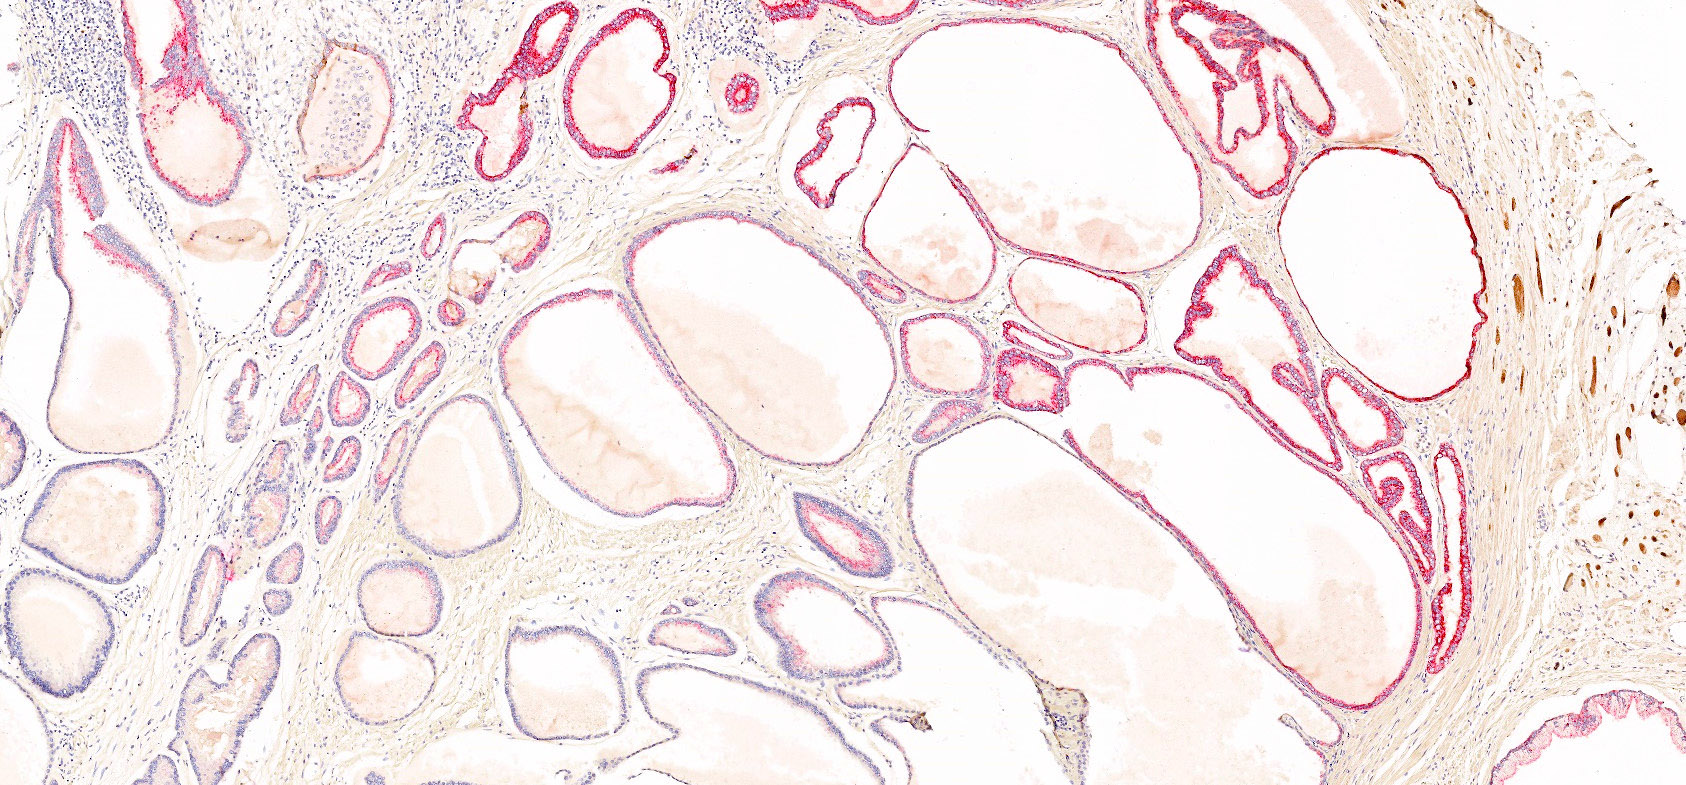 Cytoplasmic P504S